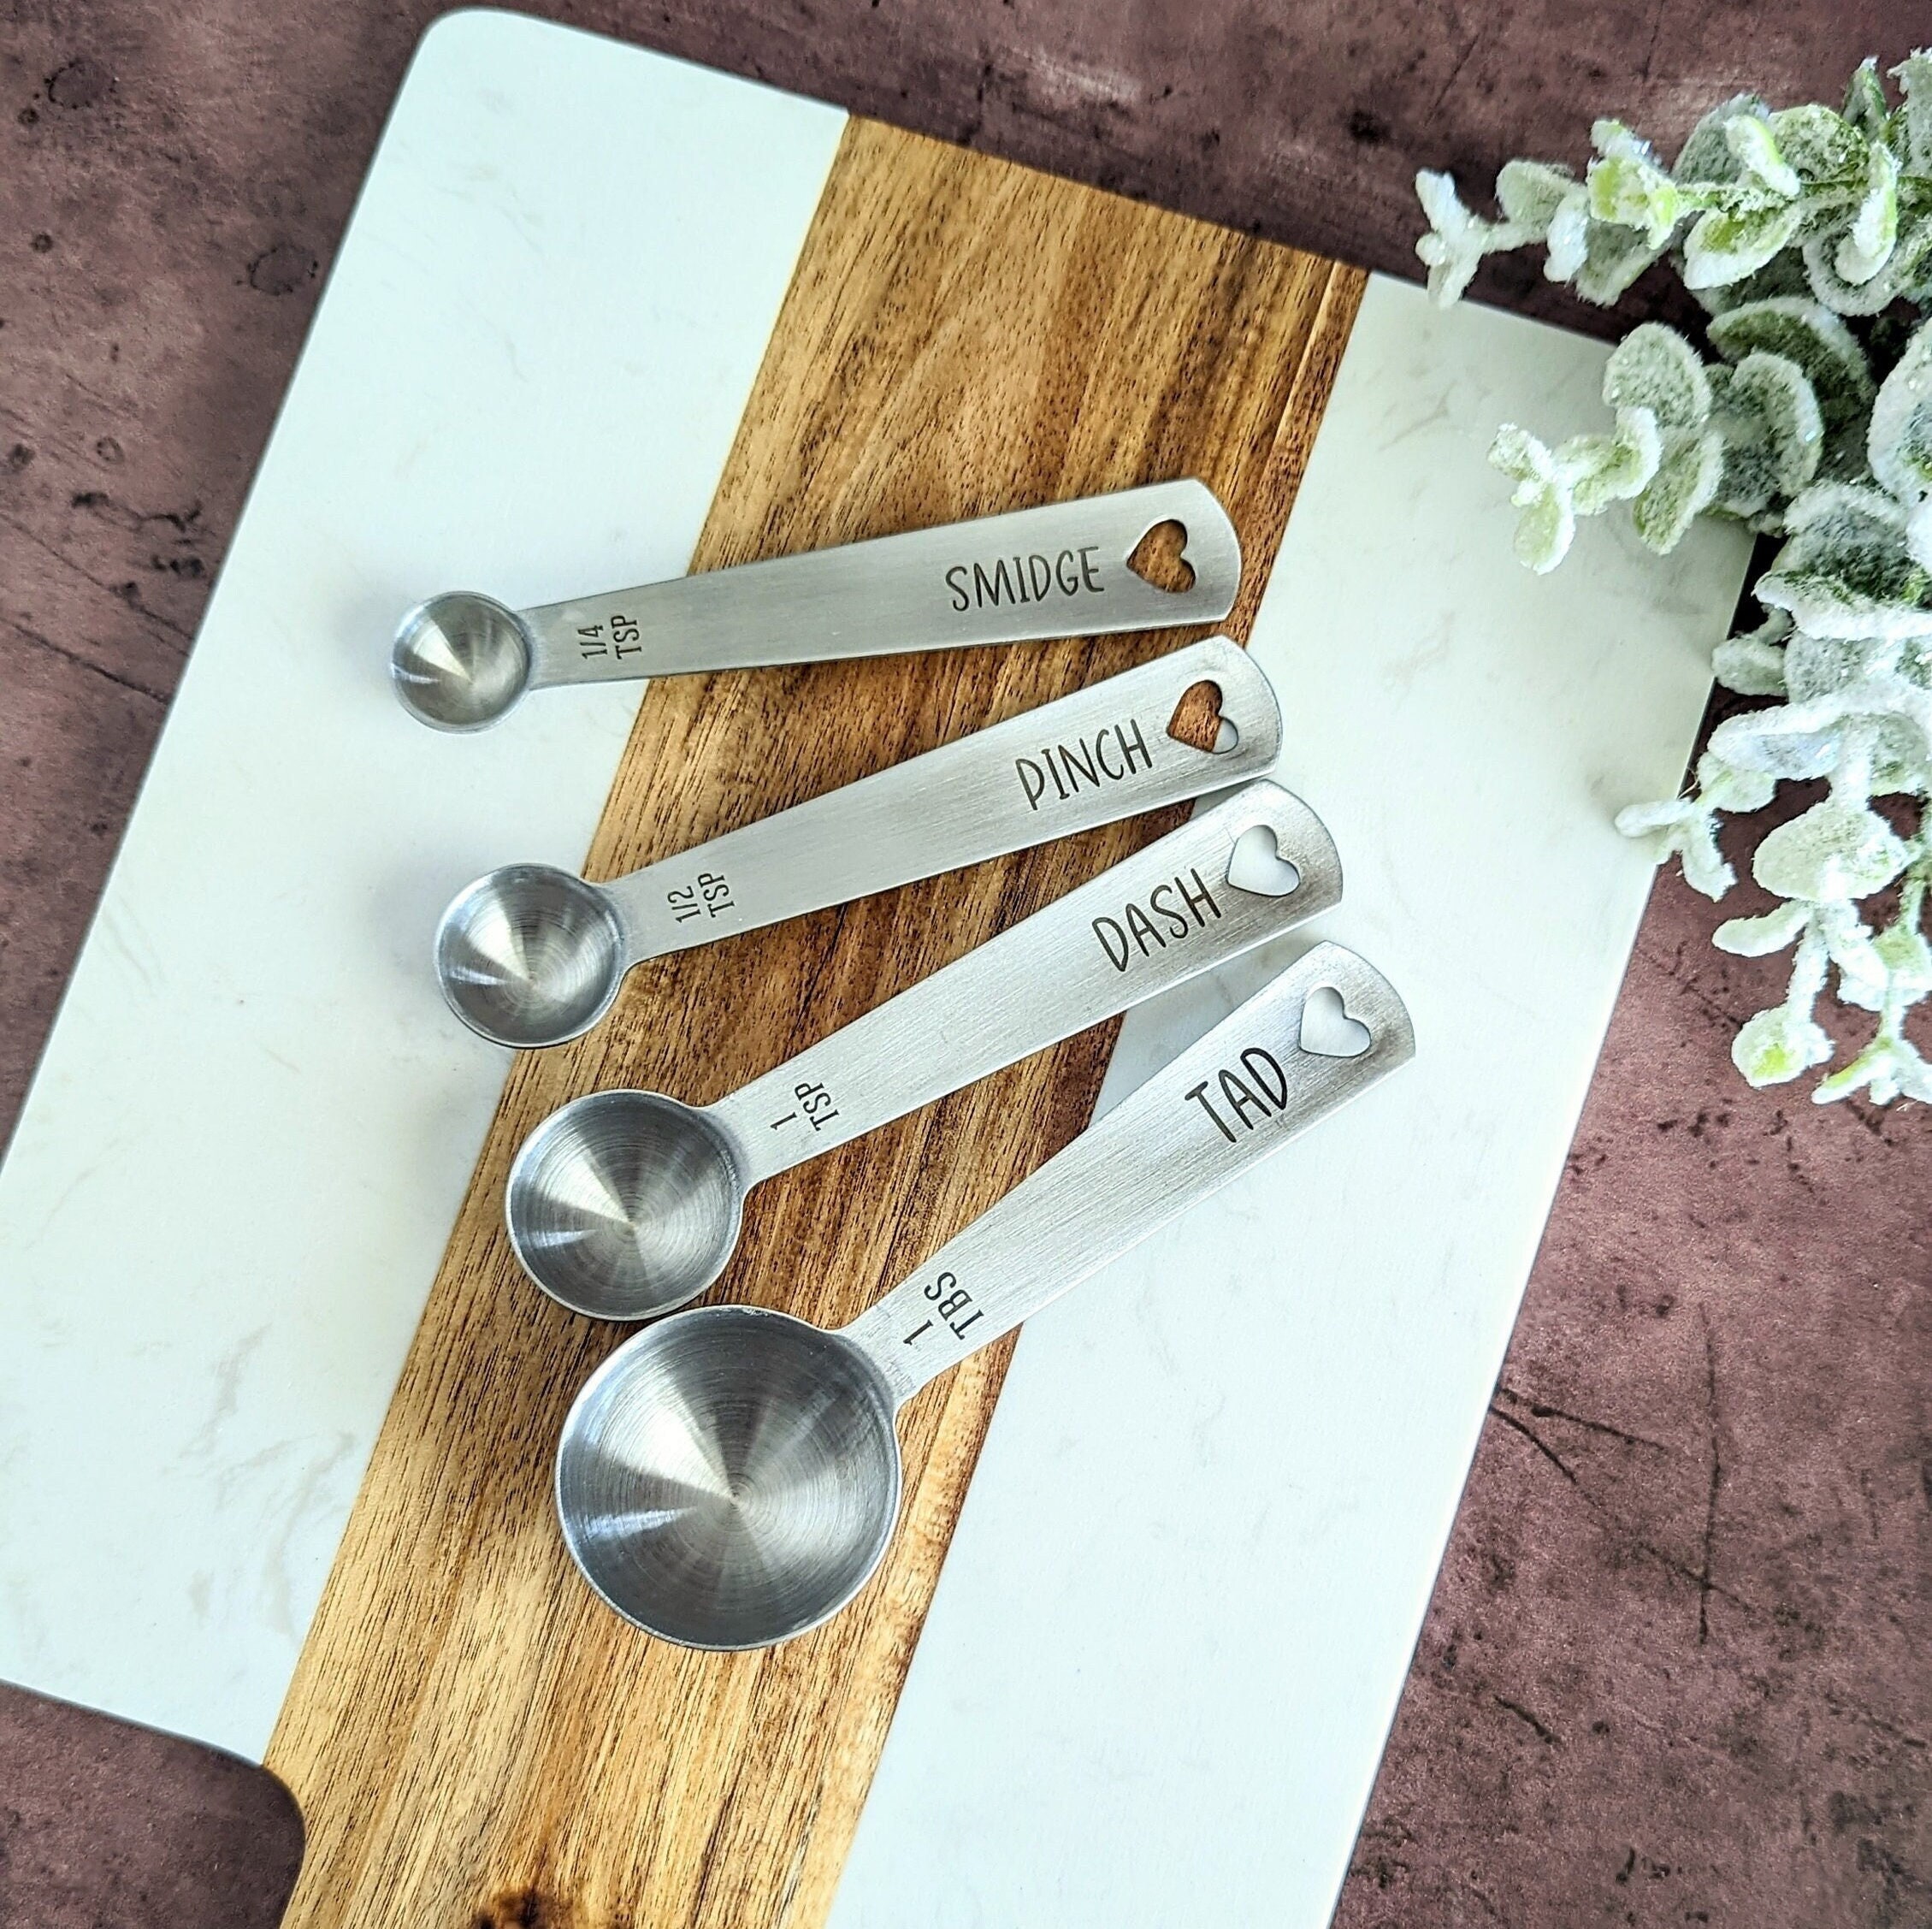 Ganz Decorative Measuring Spoons - Sheffield Spice & Tea Co